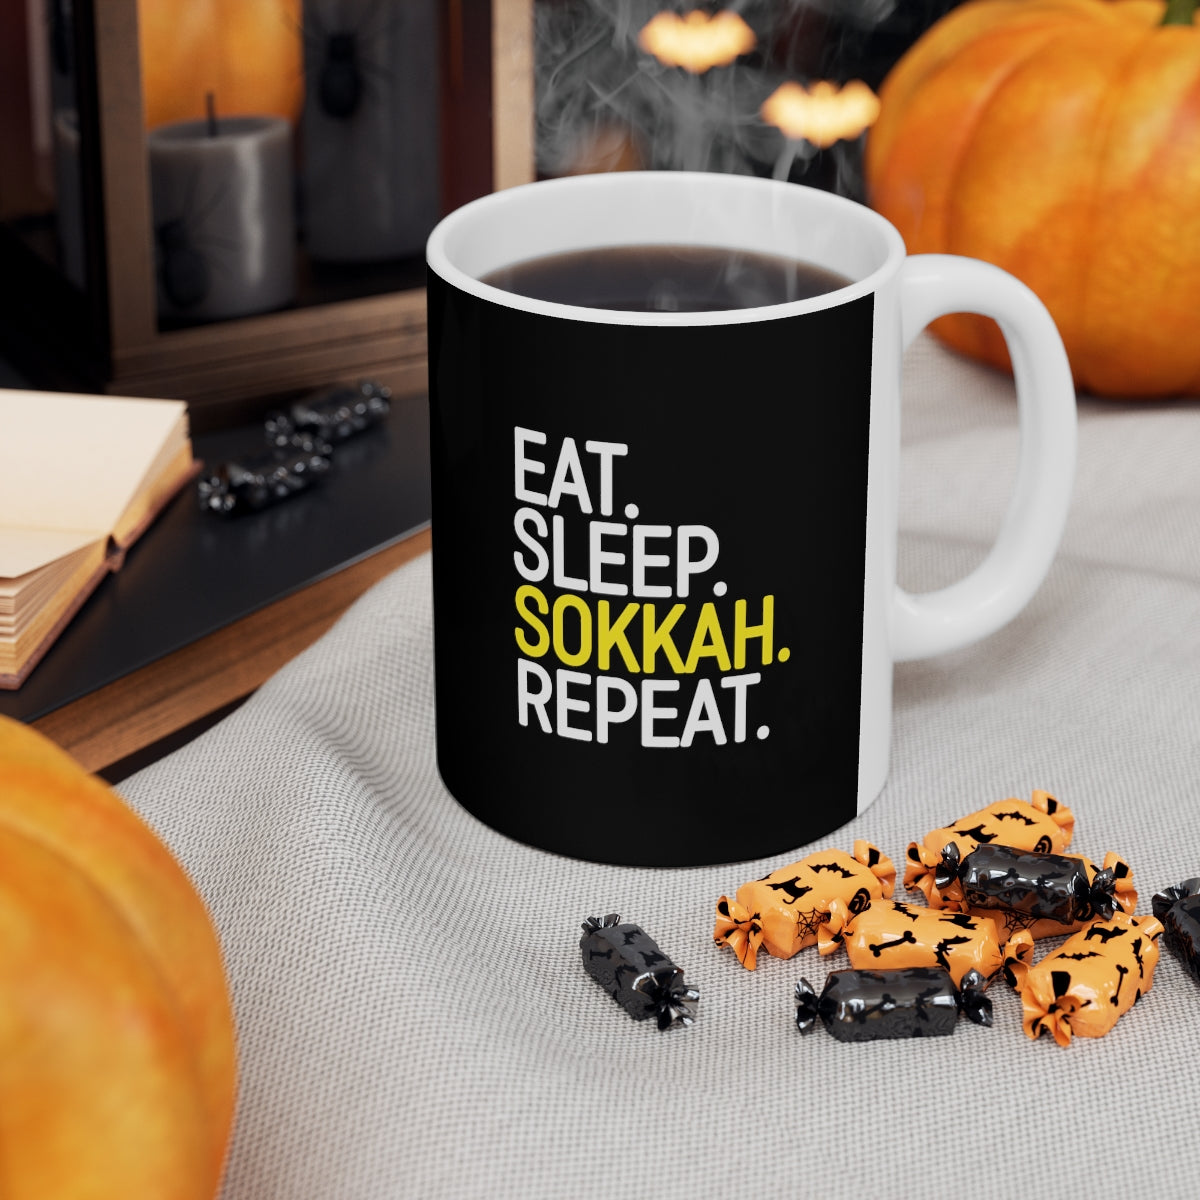 Eat. Sleep. Sokkah. Repeat.